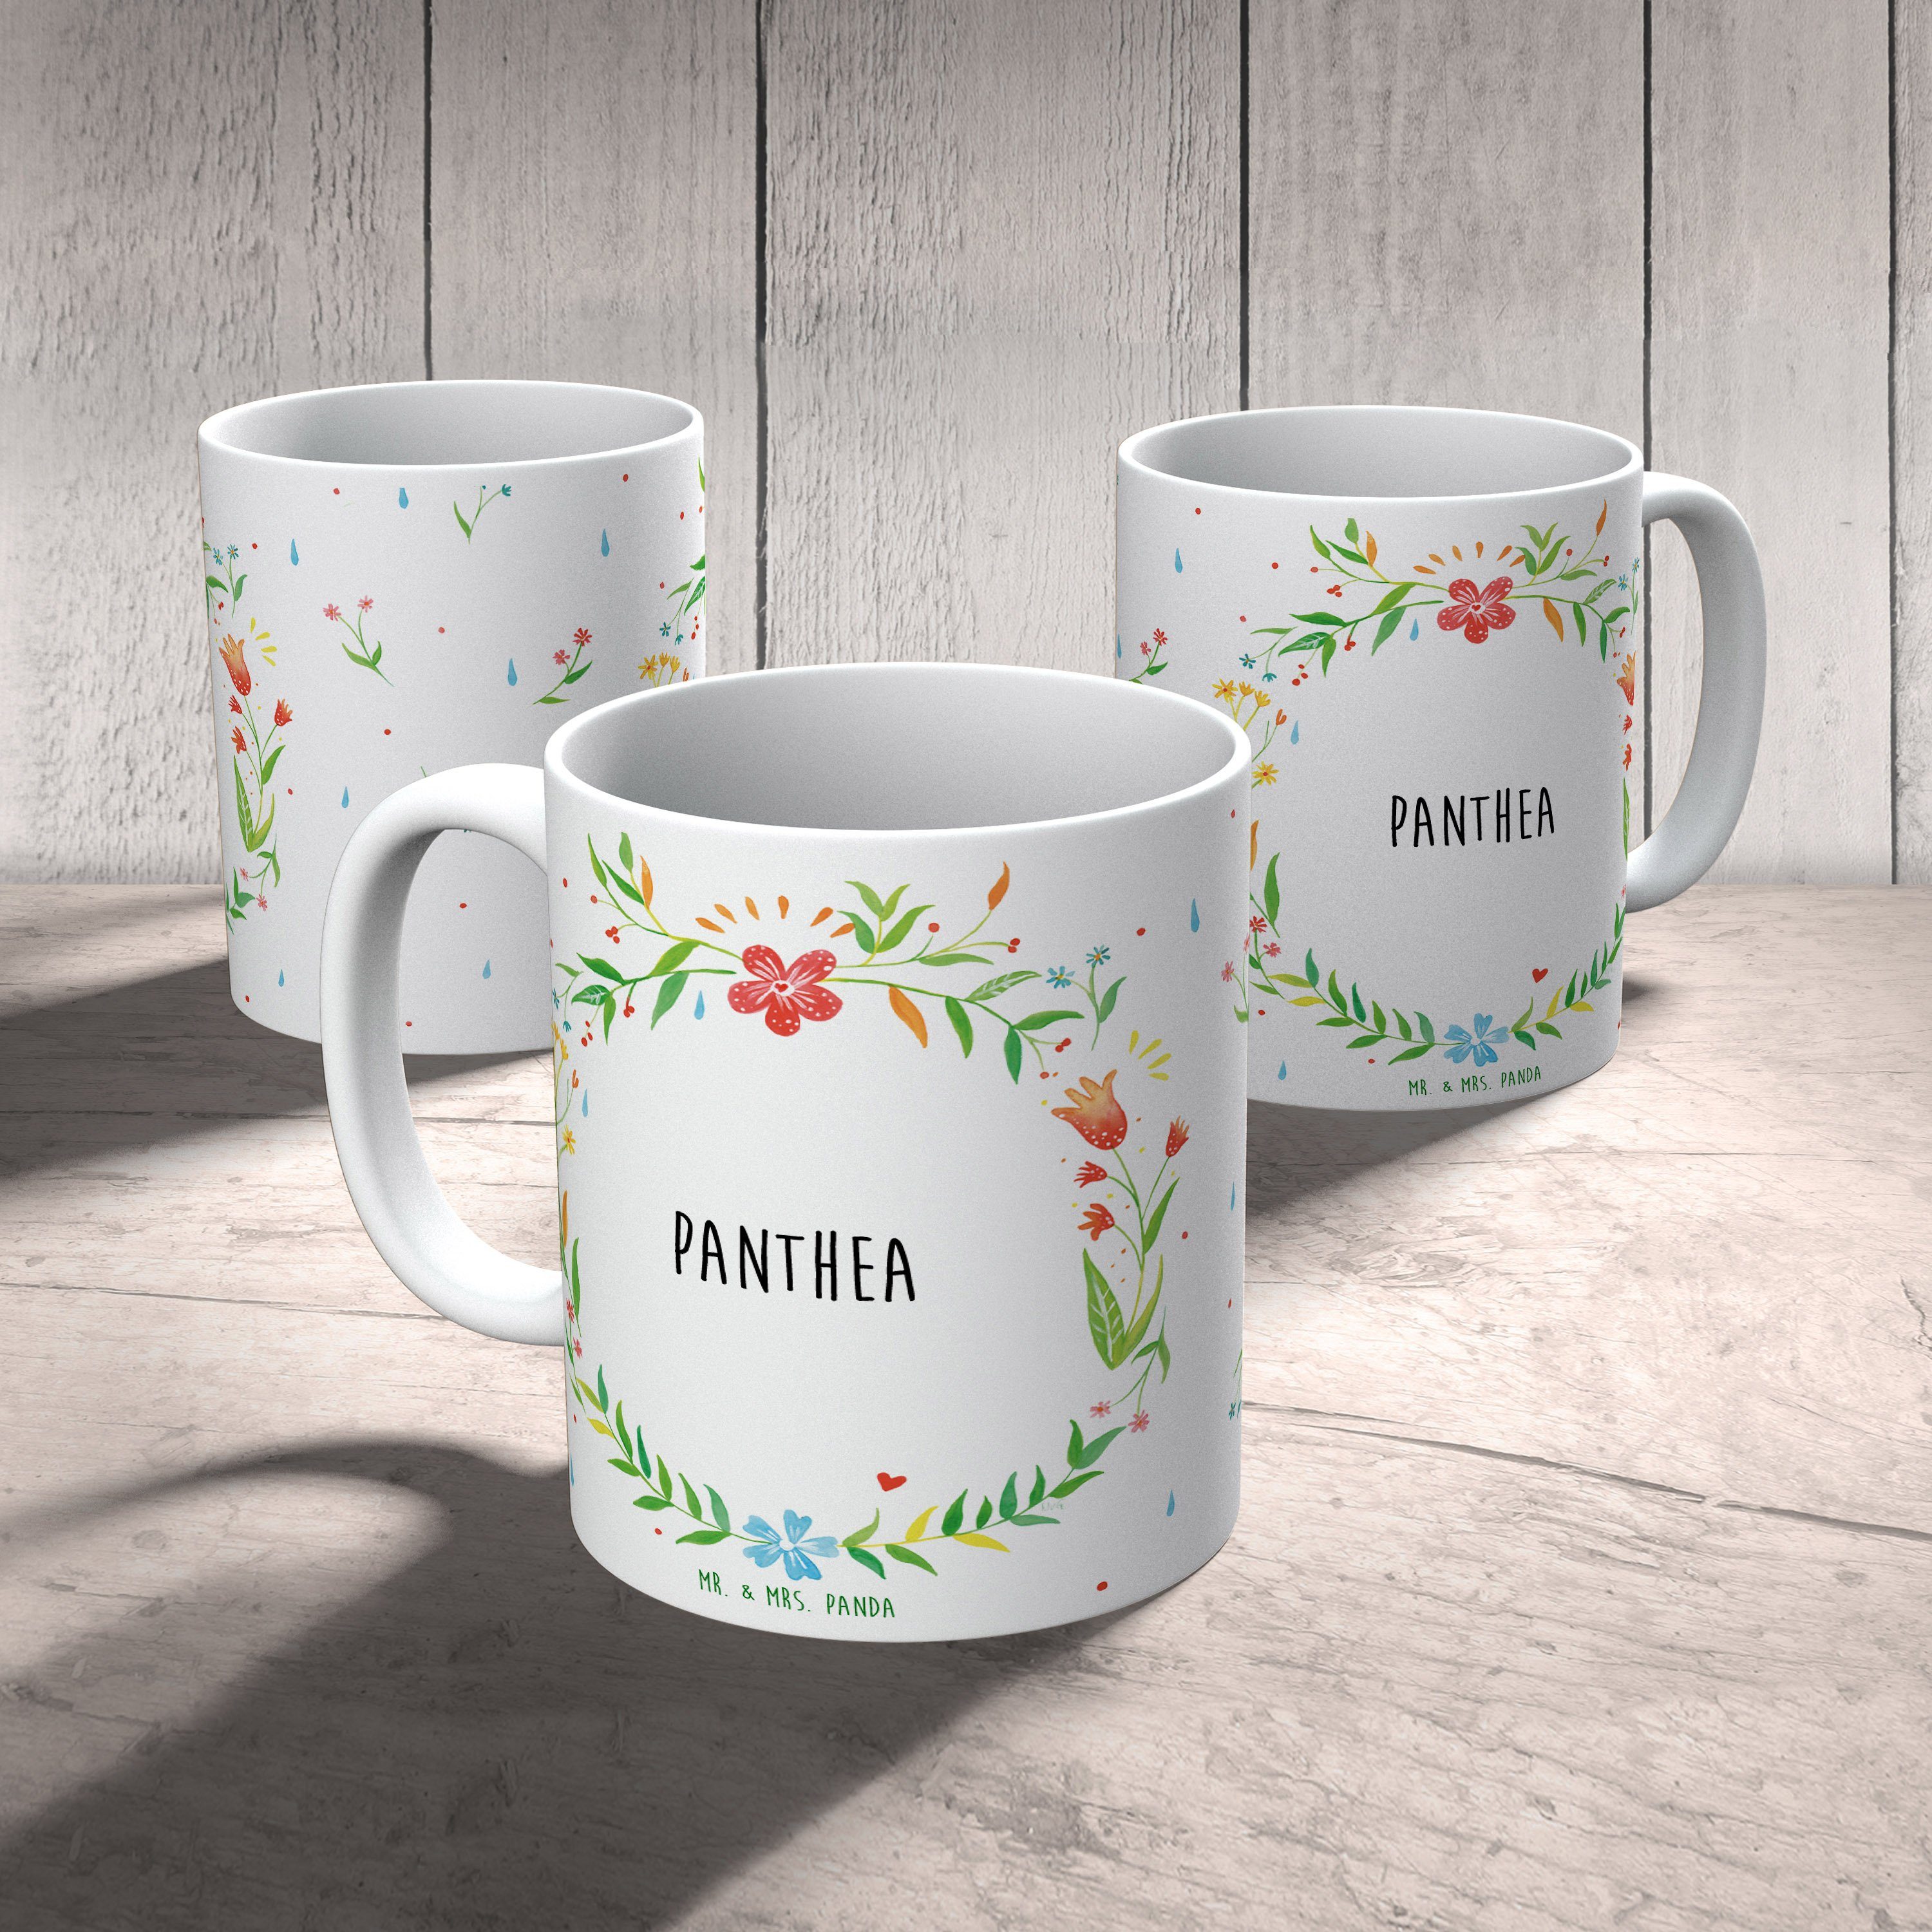 Mr. & Mrs. Panda Teetasse, Keramik - Geschenk, Kaffeetasse, Motive, Tasse T, Teebecher, Tasse Panthea